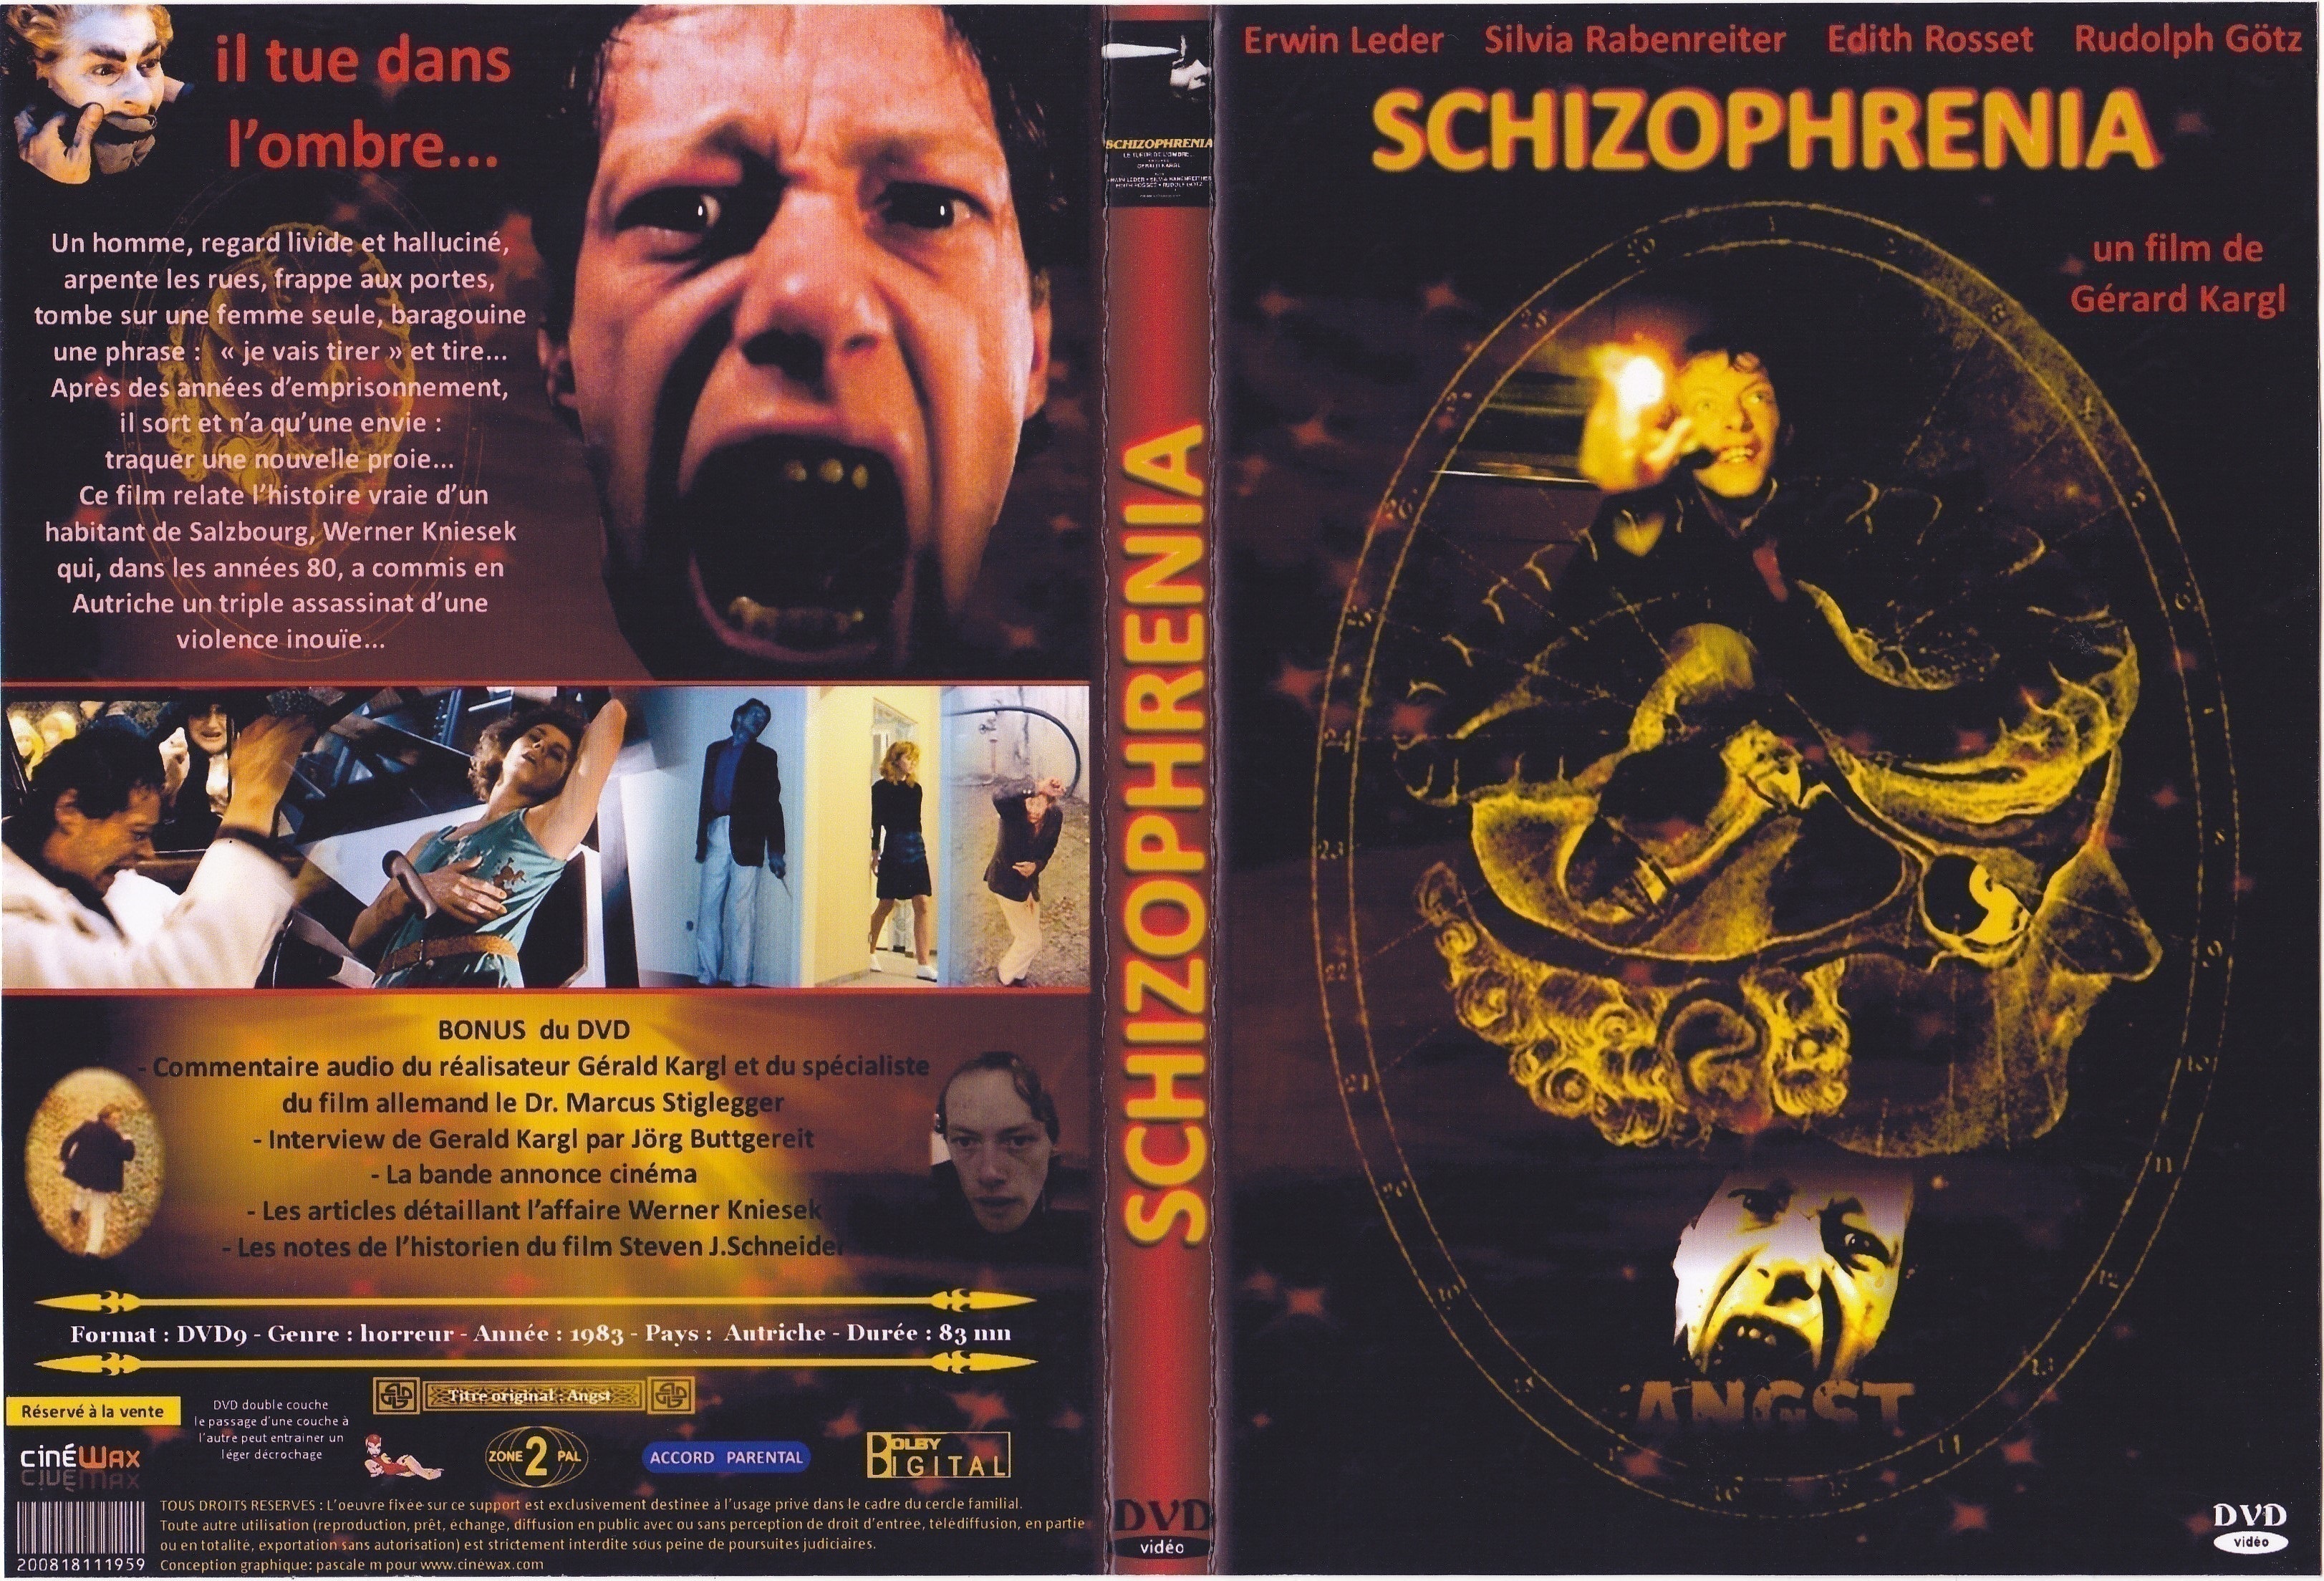 Jaquette DVD Schizophrenia